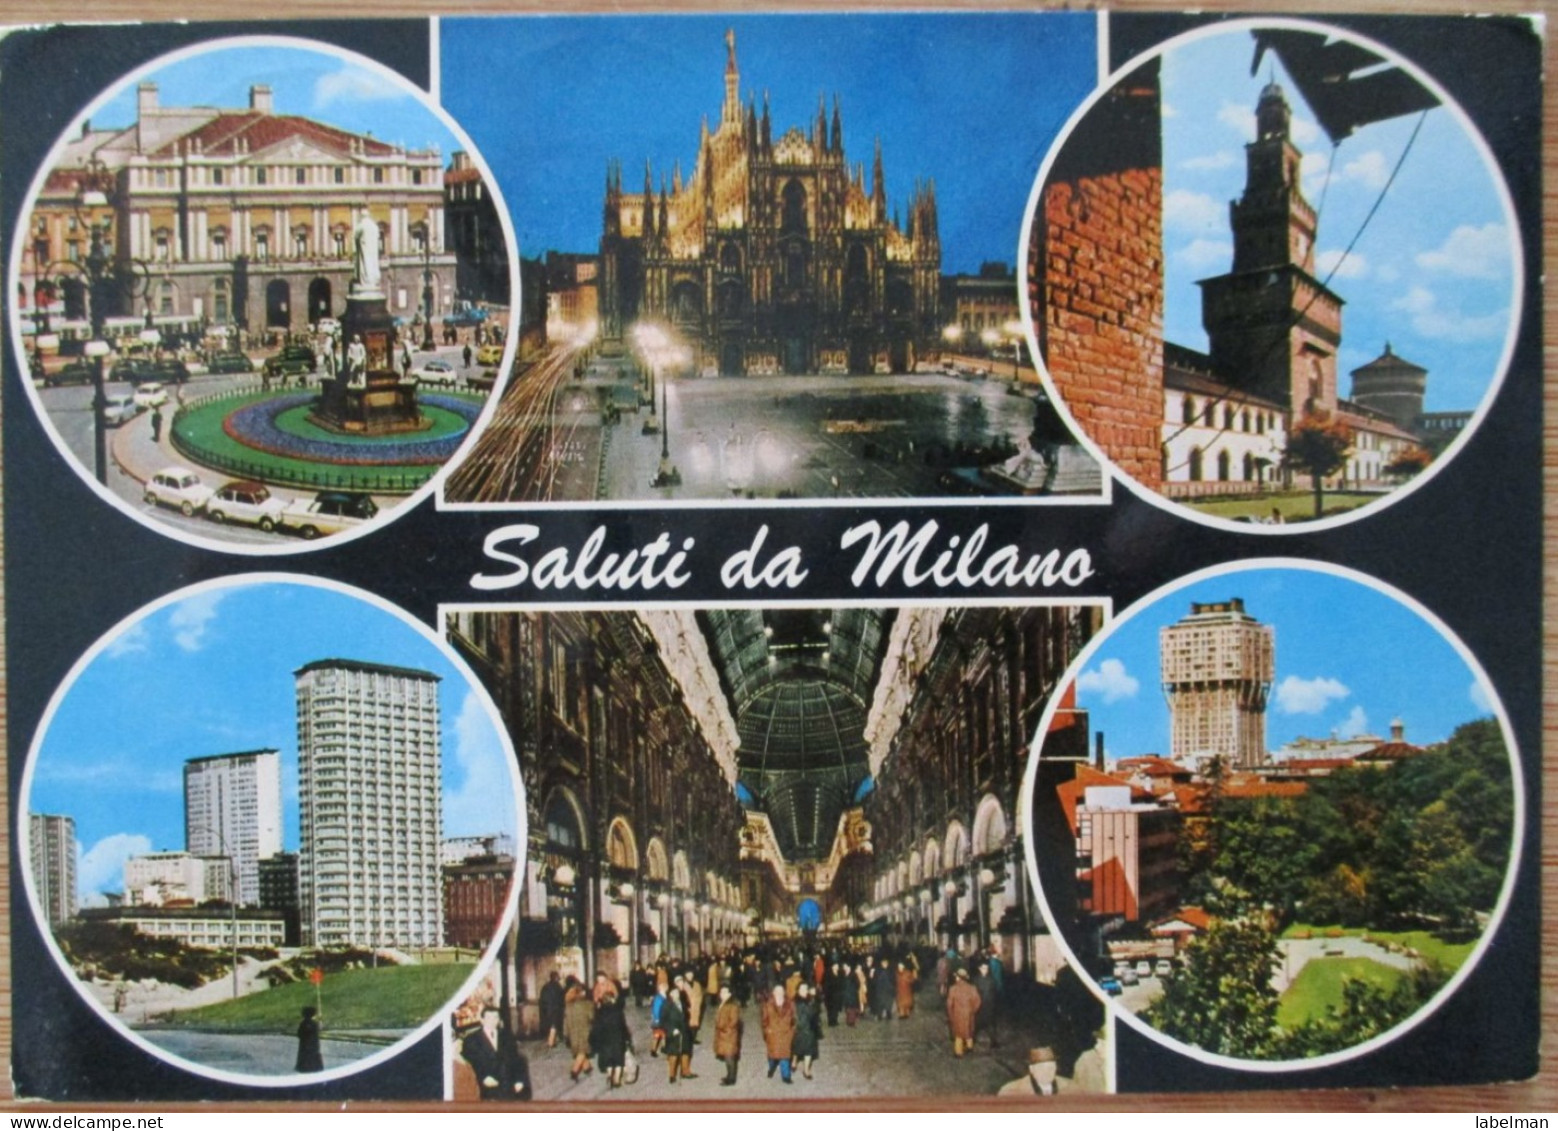 ITALIA ITALY MILANO MULTI VIEW PANORAMA POSTCARD CARTE POSTALE ANSICHTSKARTE CARTOLINA POSTKARTE CARD - Napoli (Neapel)